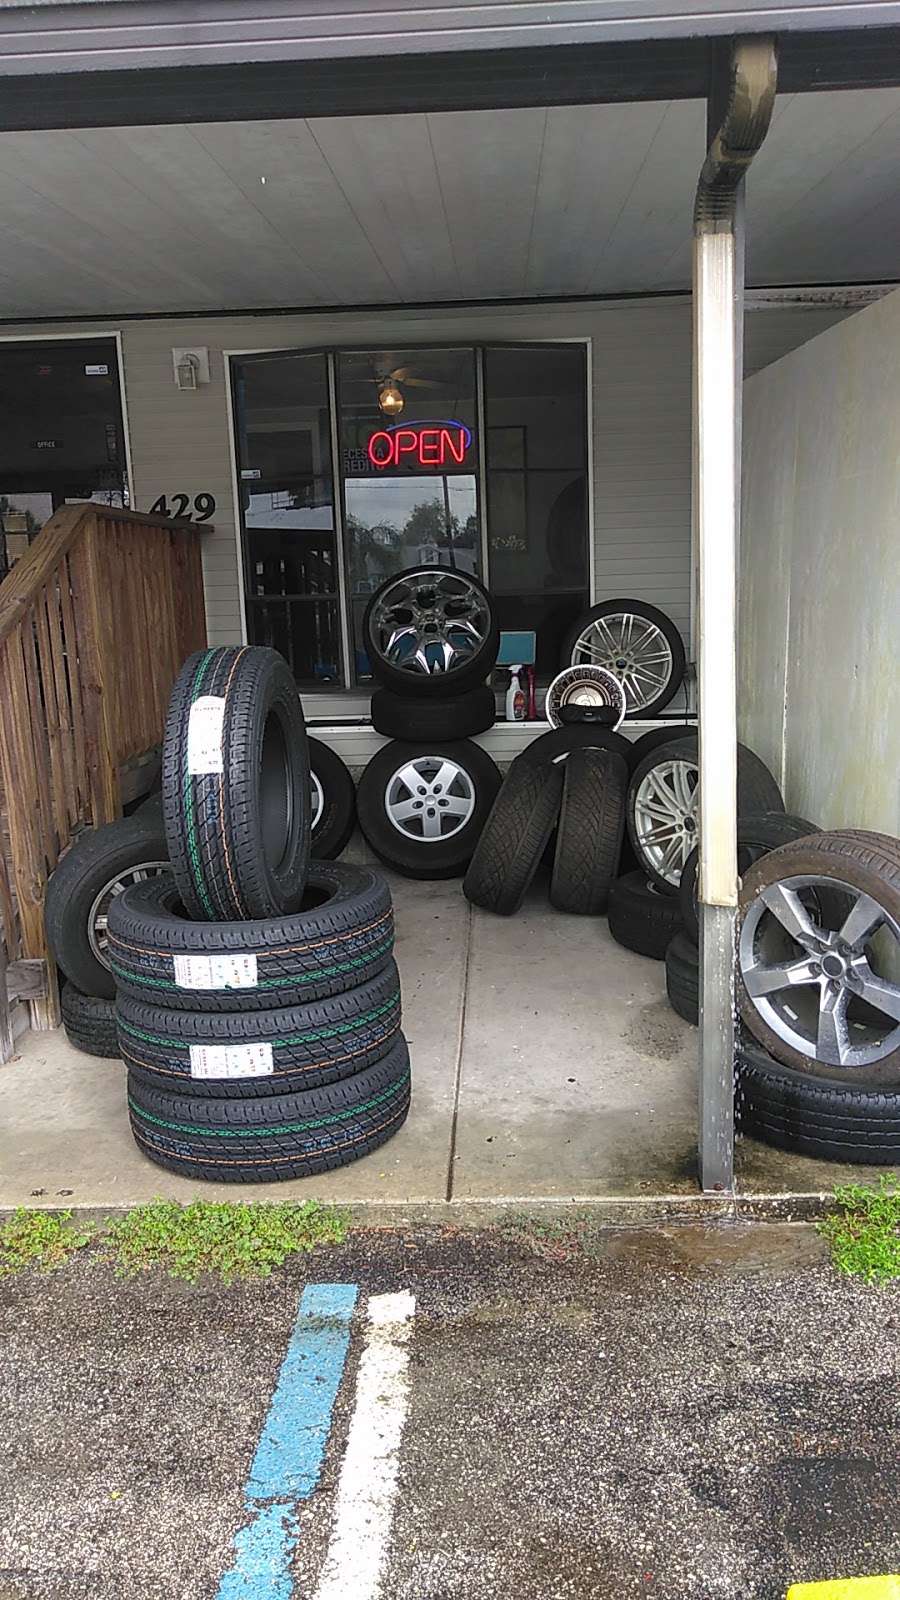 Best Tires Inc | 429 W Main St, Apopka, FL 32712 | Phone: (407) 814-4340